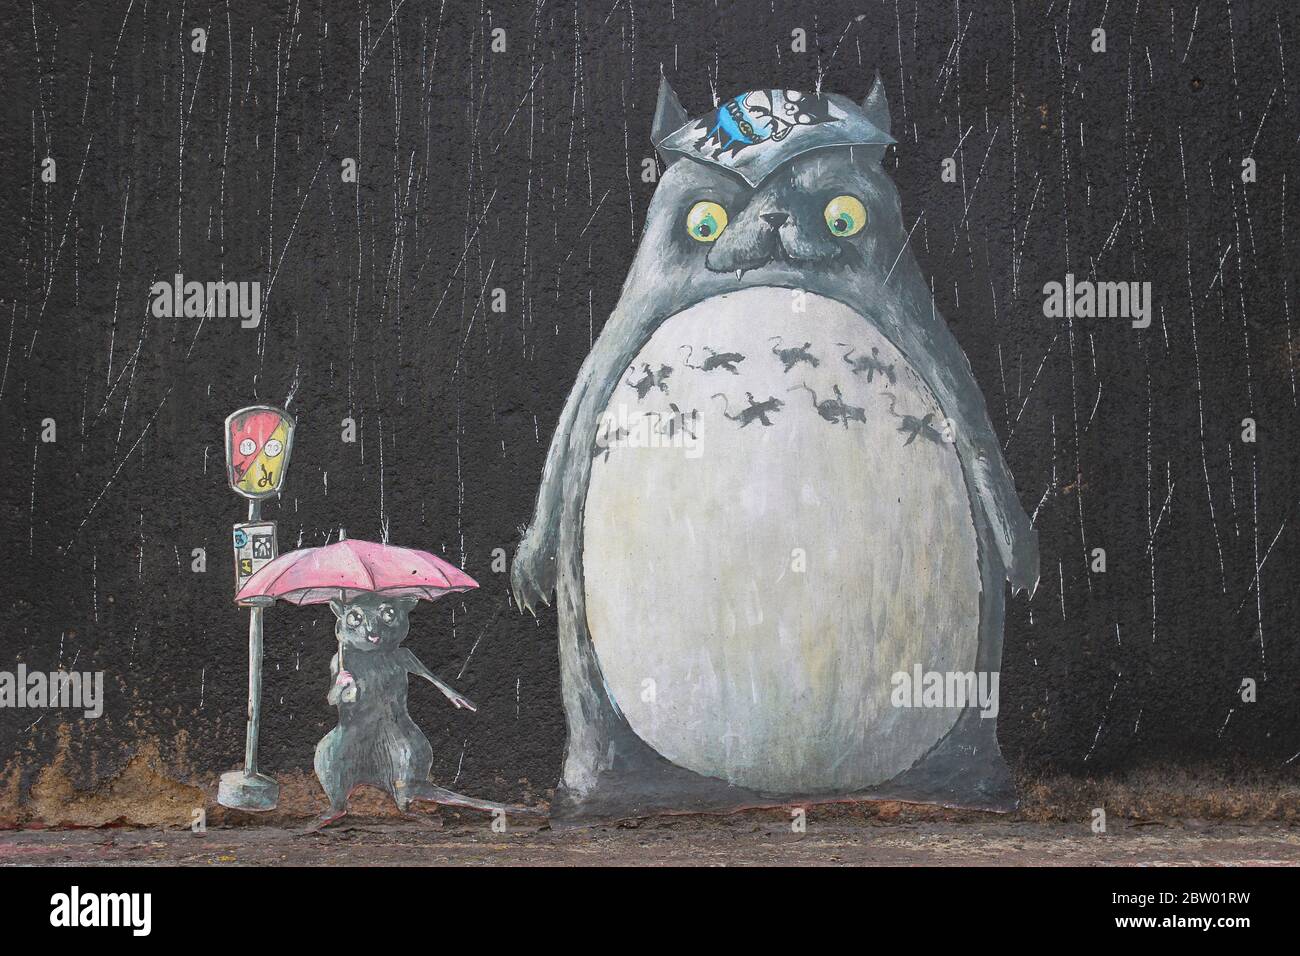 Graffiti Paste Ups Art by Lost Hills of Miyazaki’s animation movie “My Neighbor Totoro”. Stock Photo